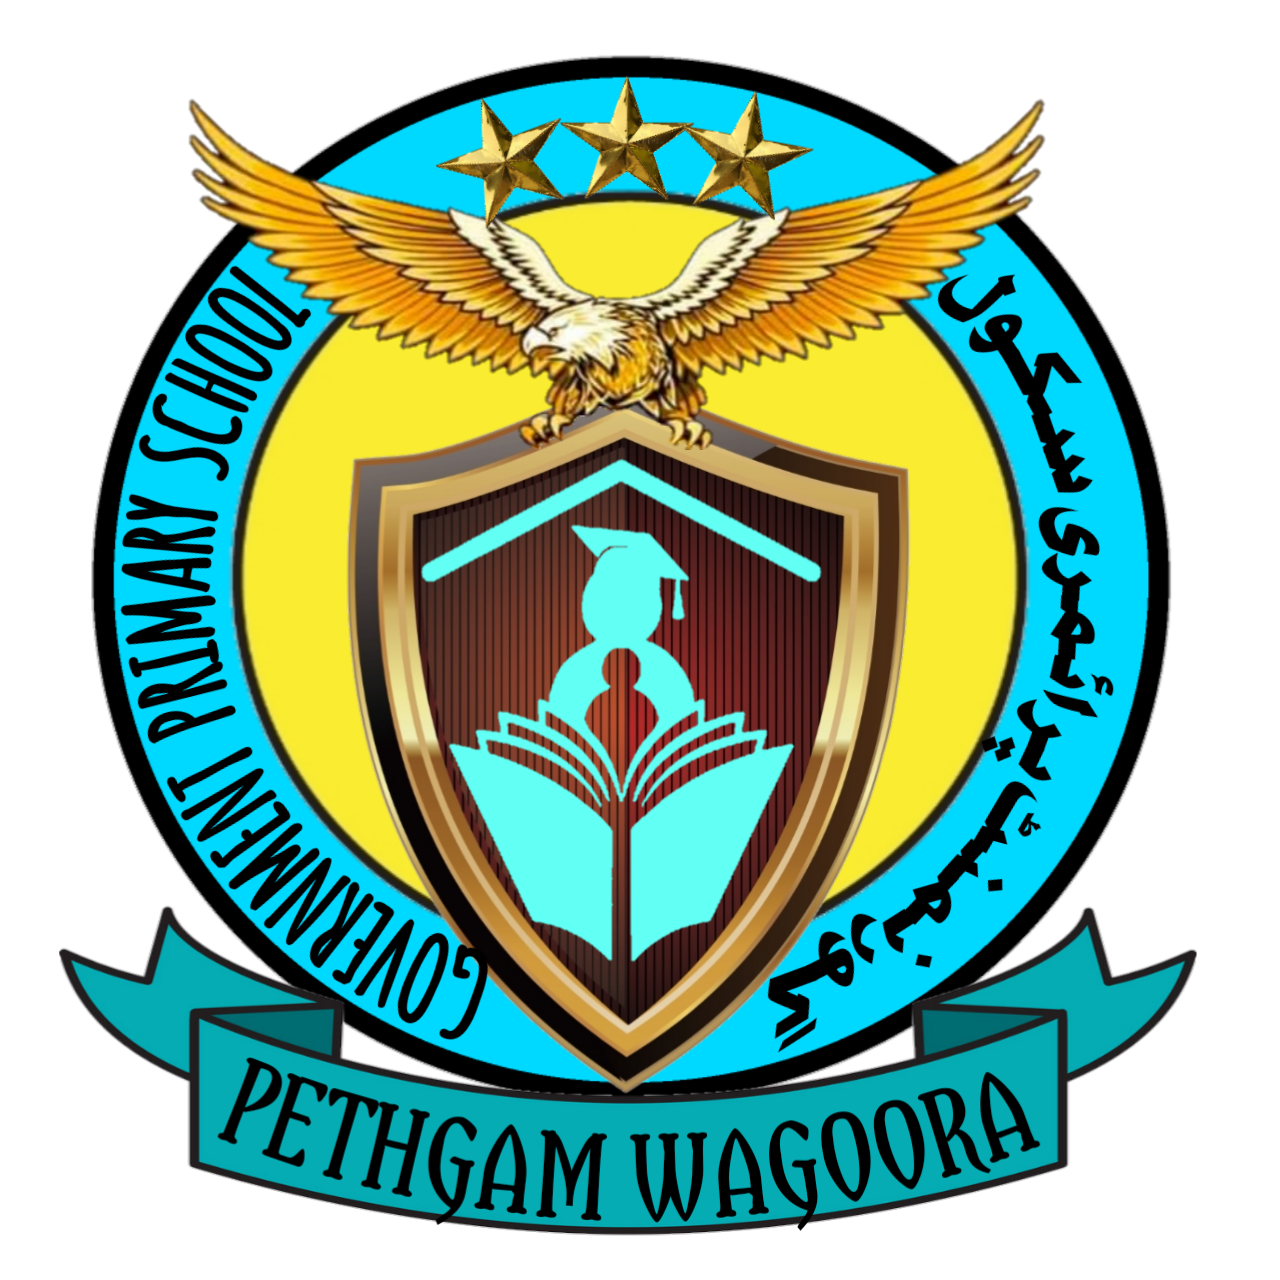 GOVERNMENT PRIMARY SCHOOL PETHGAM WAGOORA - Logo